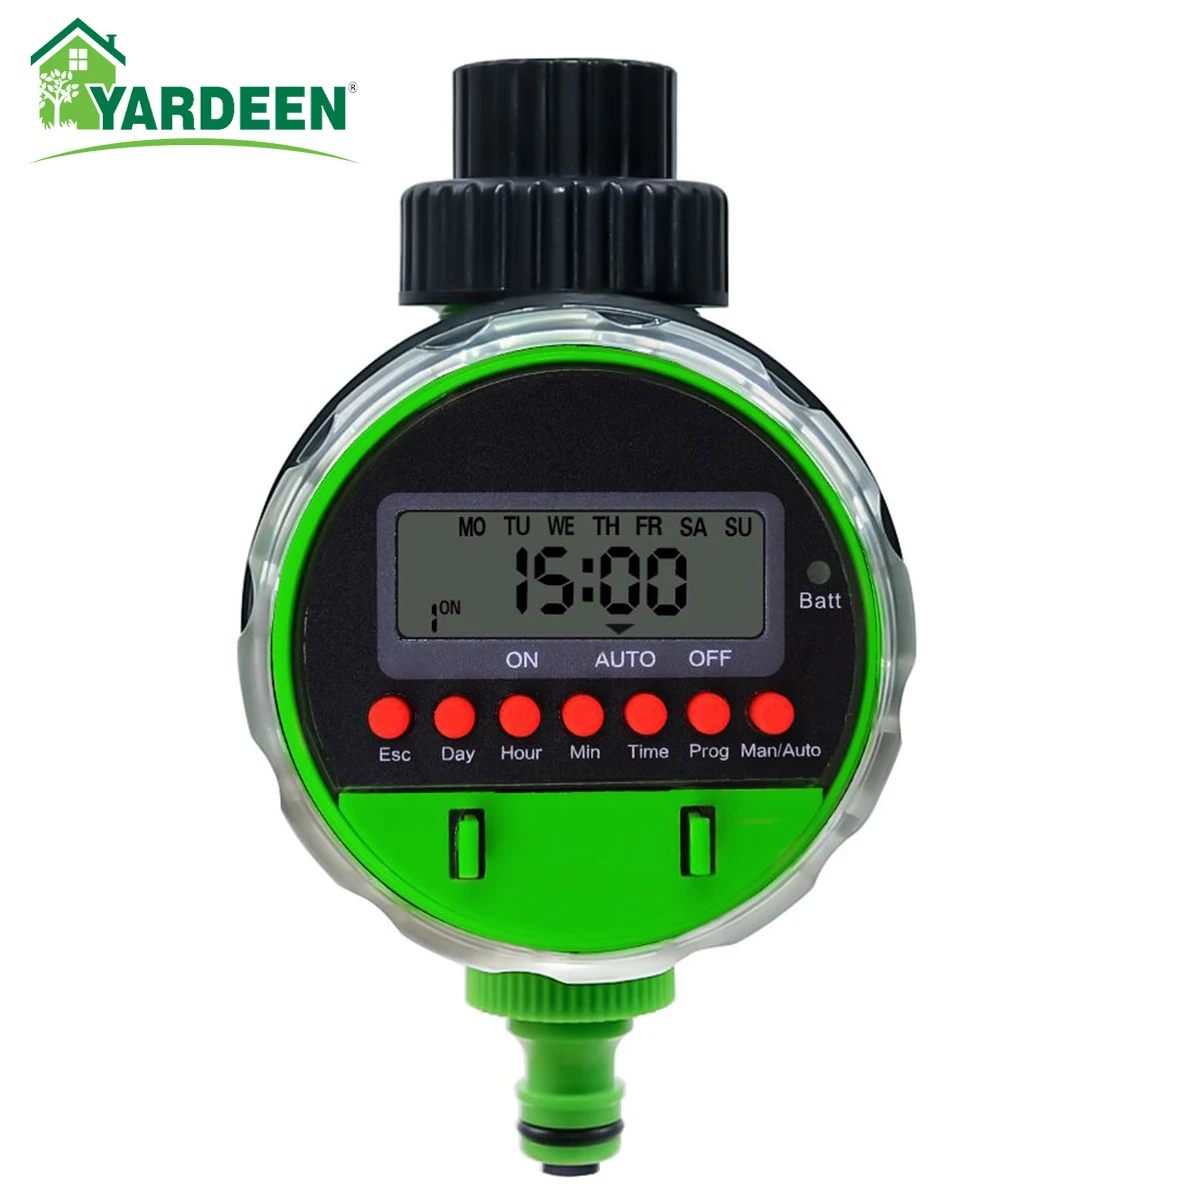 New Arrival Yardeen Garden Ball Valve Irrigation Water Timer Automatic Program Irrigation Watering Controller Green